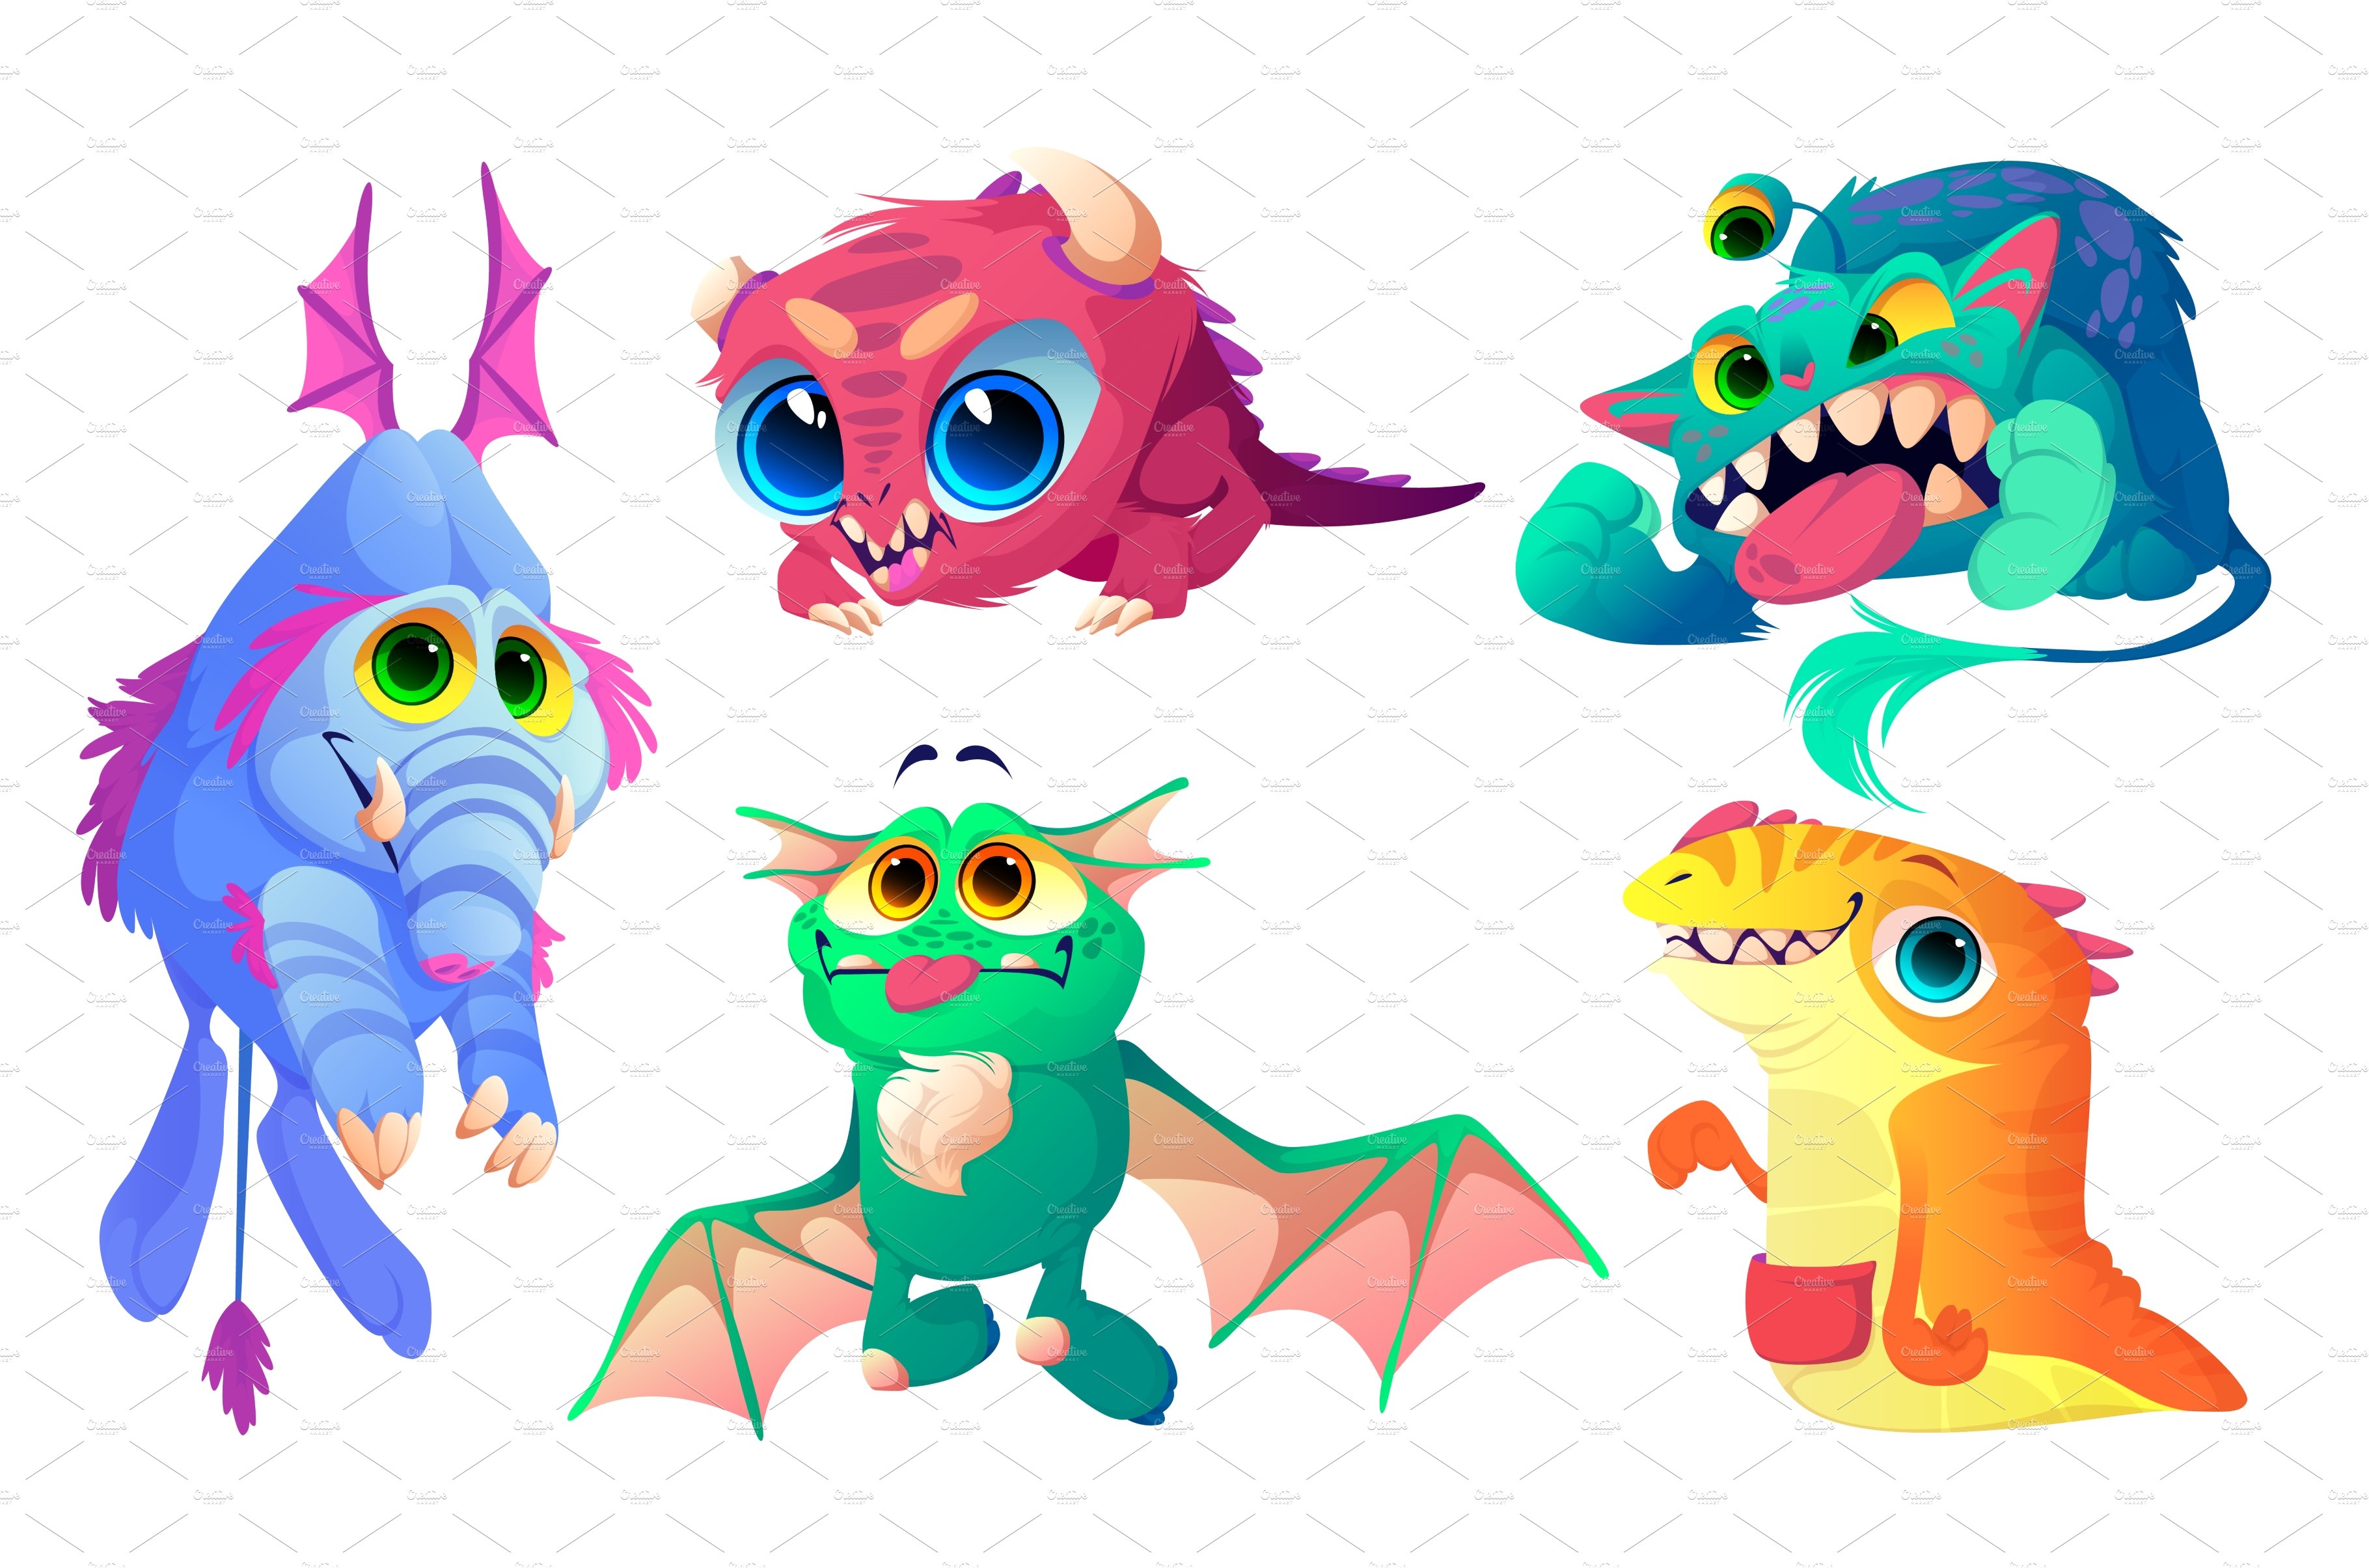 Monsters set, cute cartoon cover image.